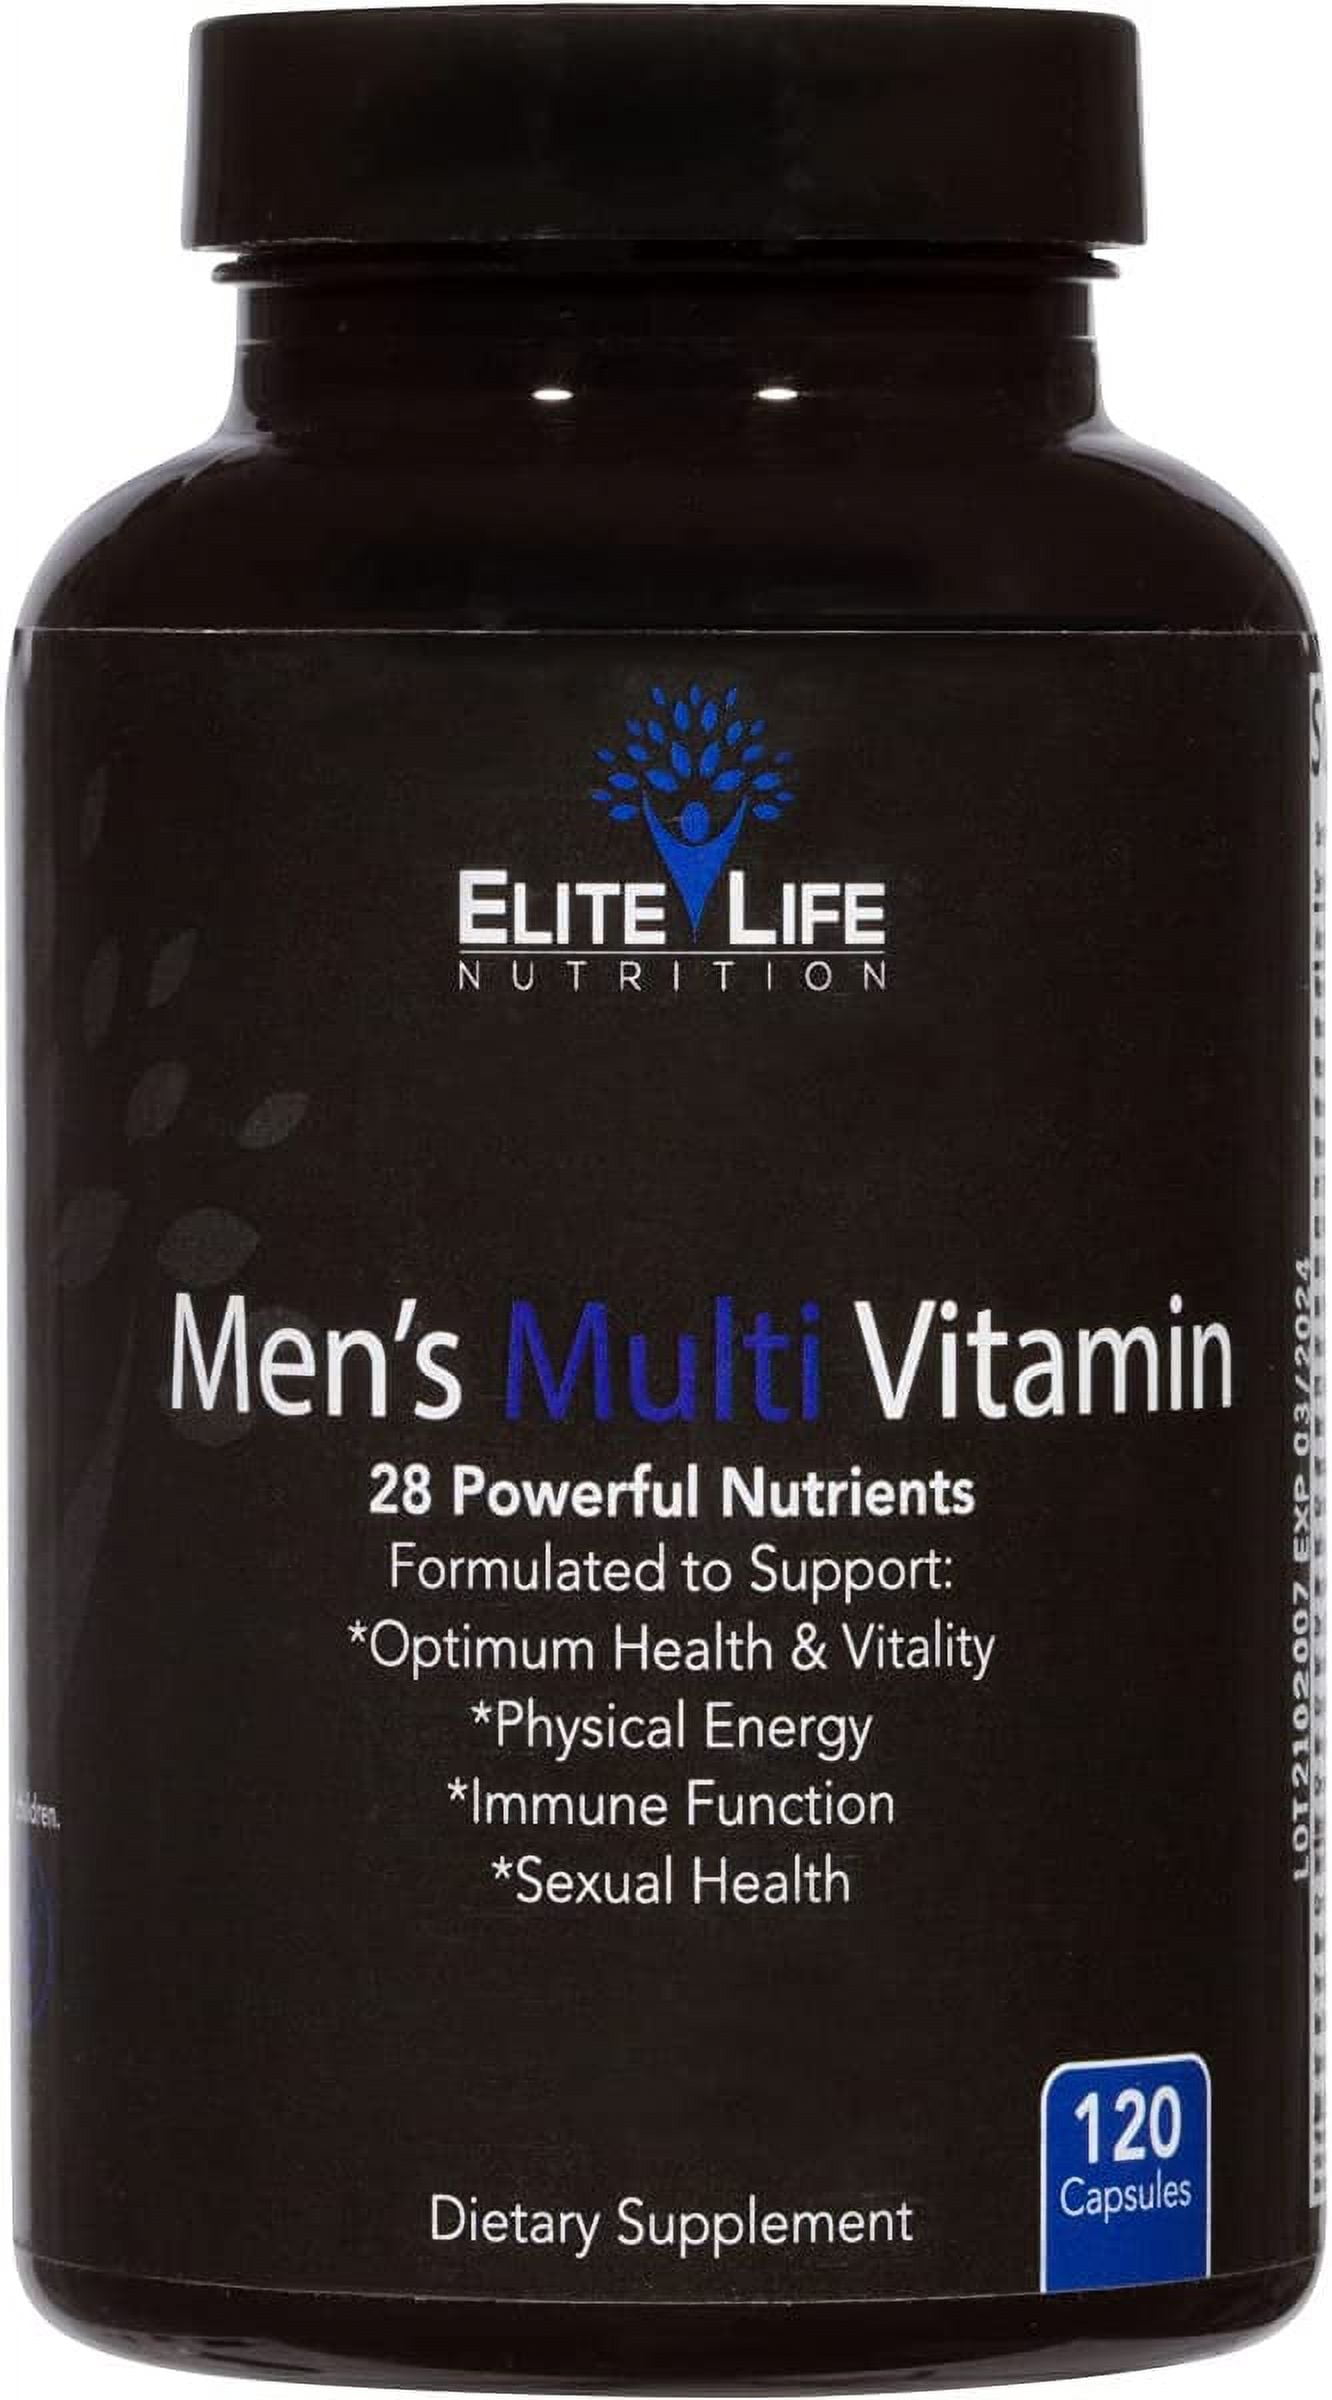 Men's Multi Vitamin - 28 Powerful Nutrients, Vitamins, and Minerals ...